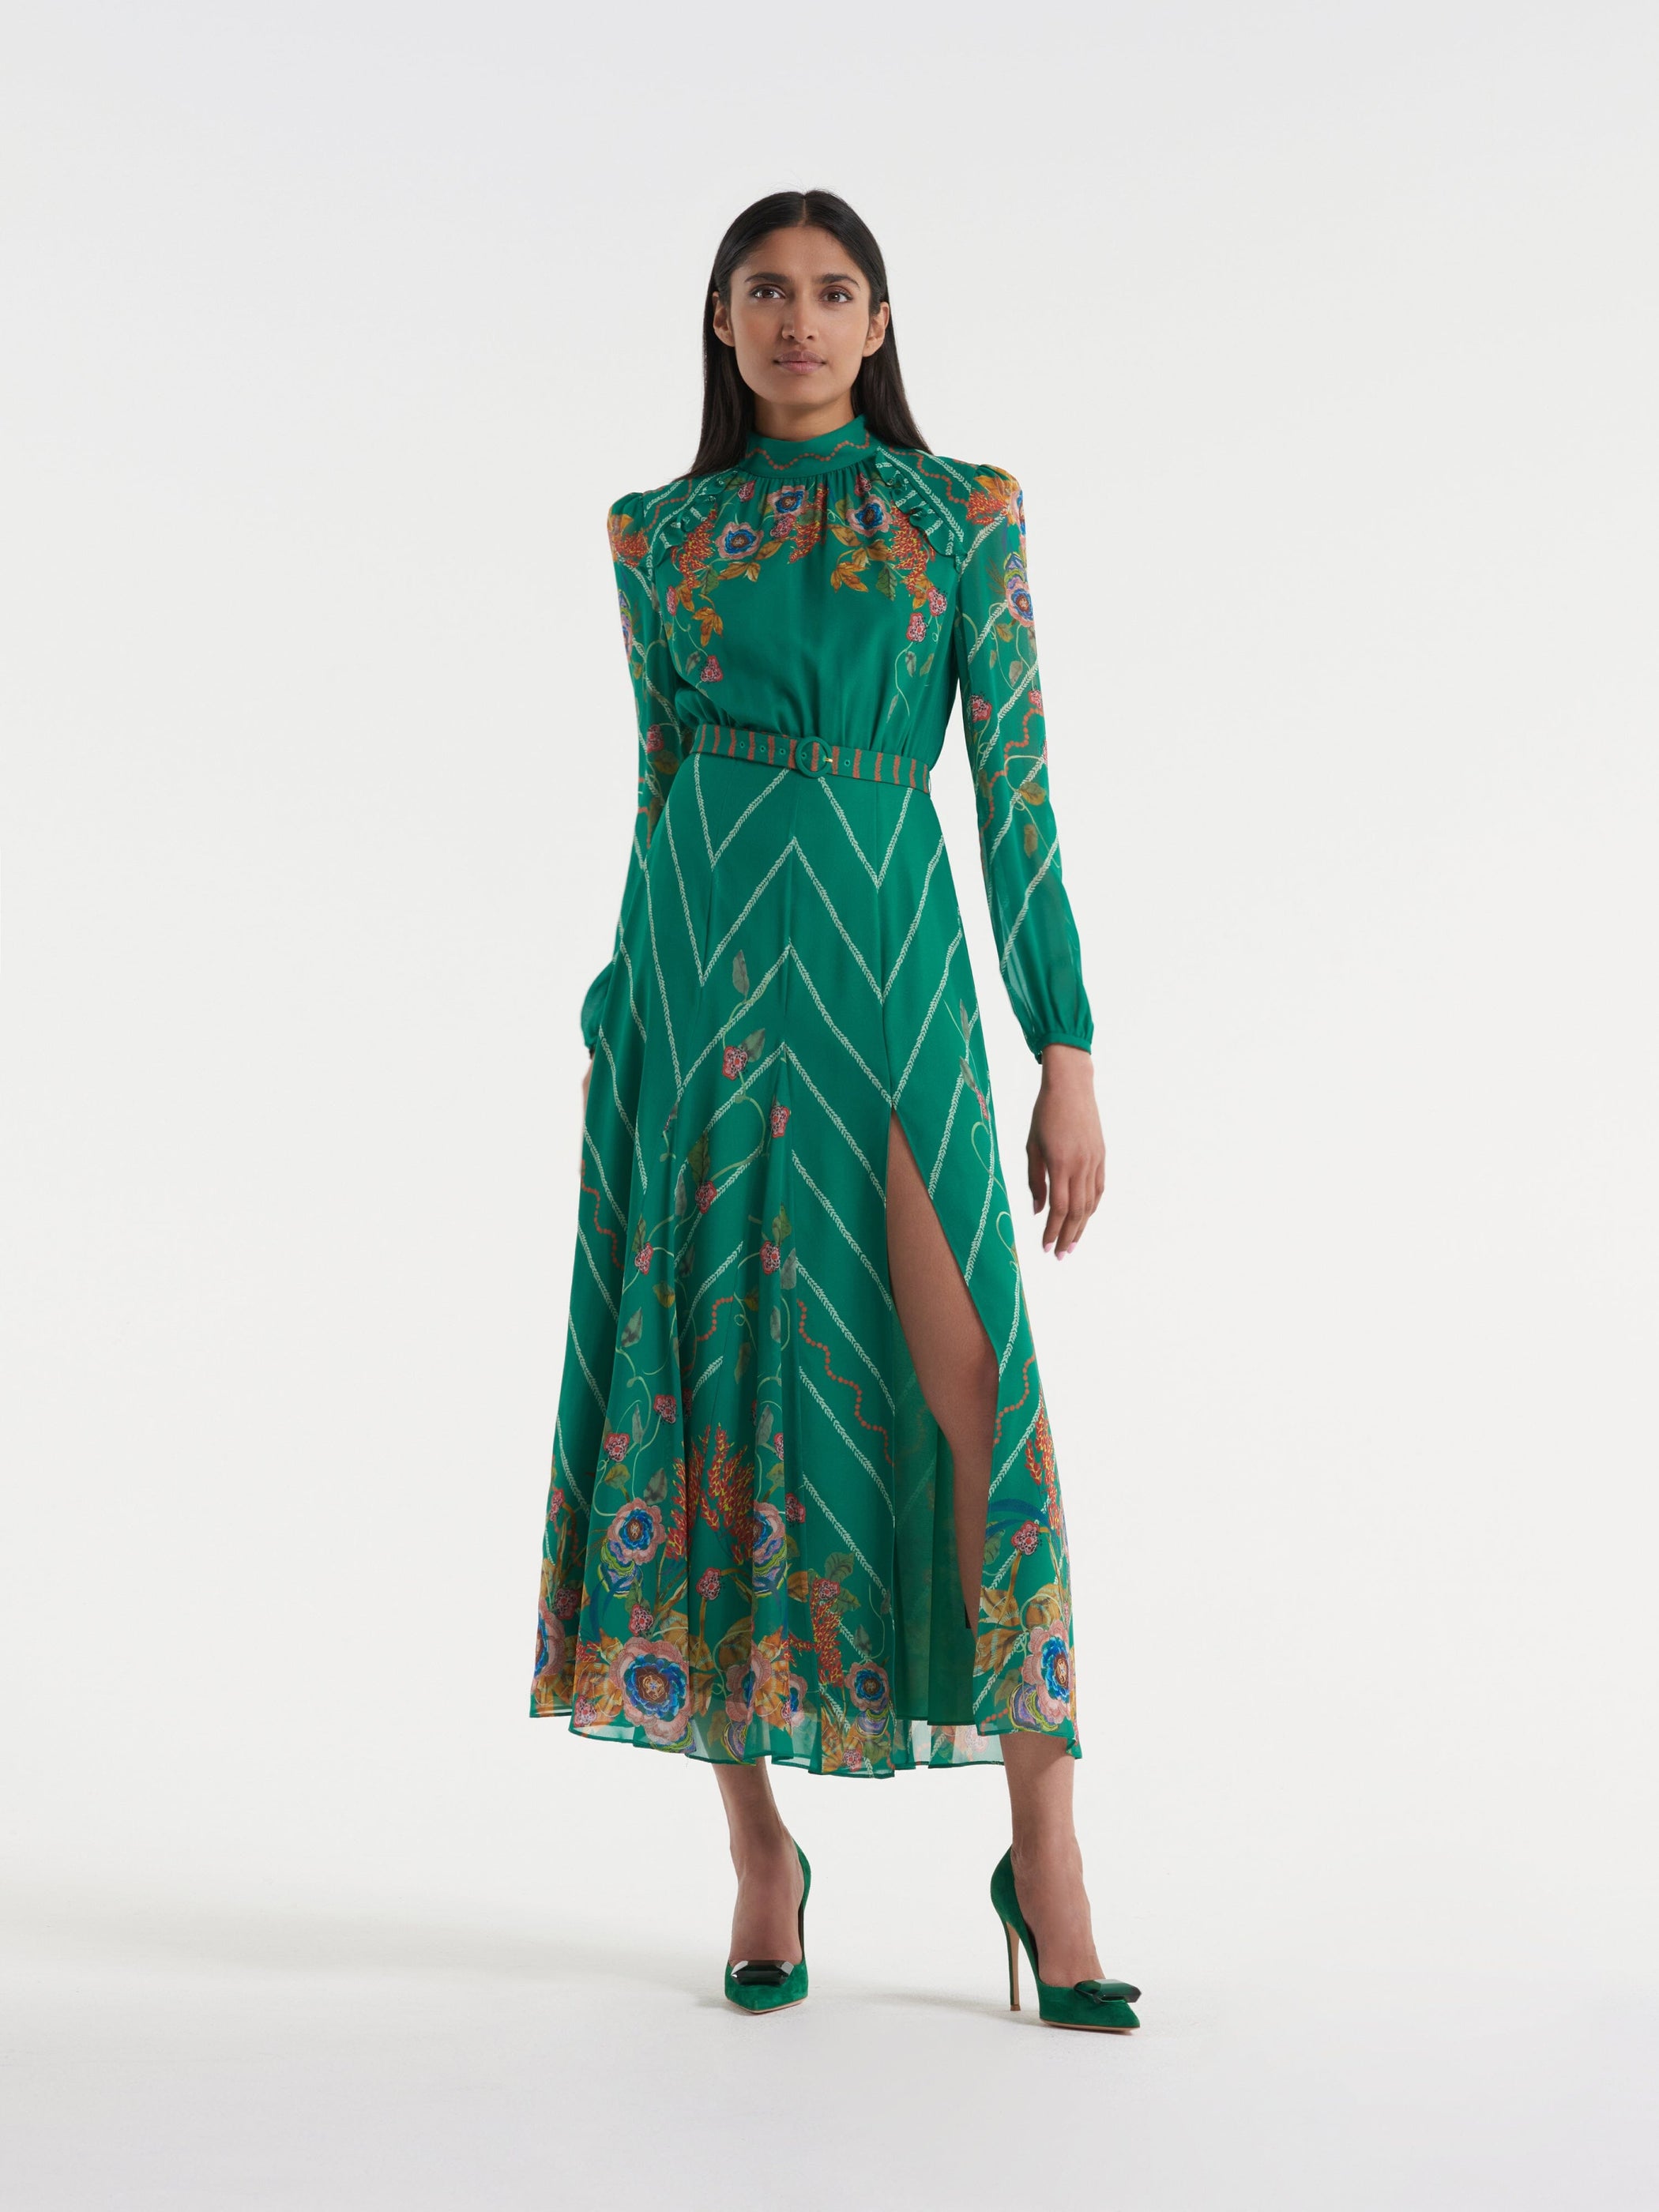 Jacqui B Dress in Emerald Barley